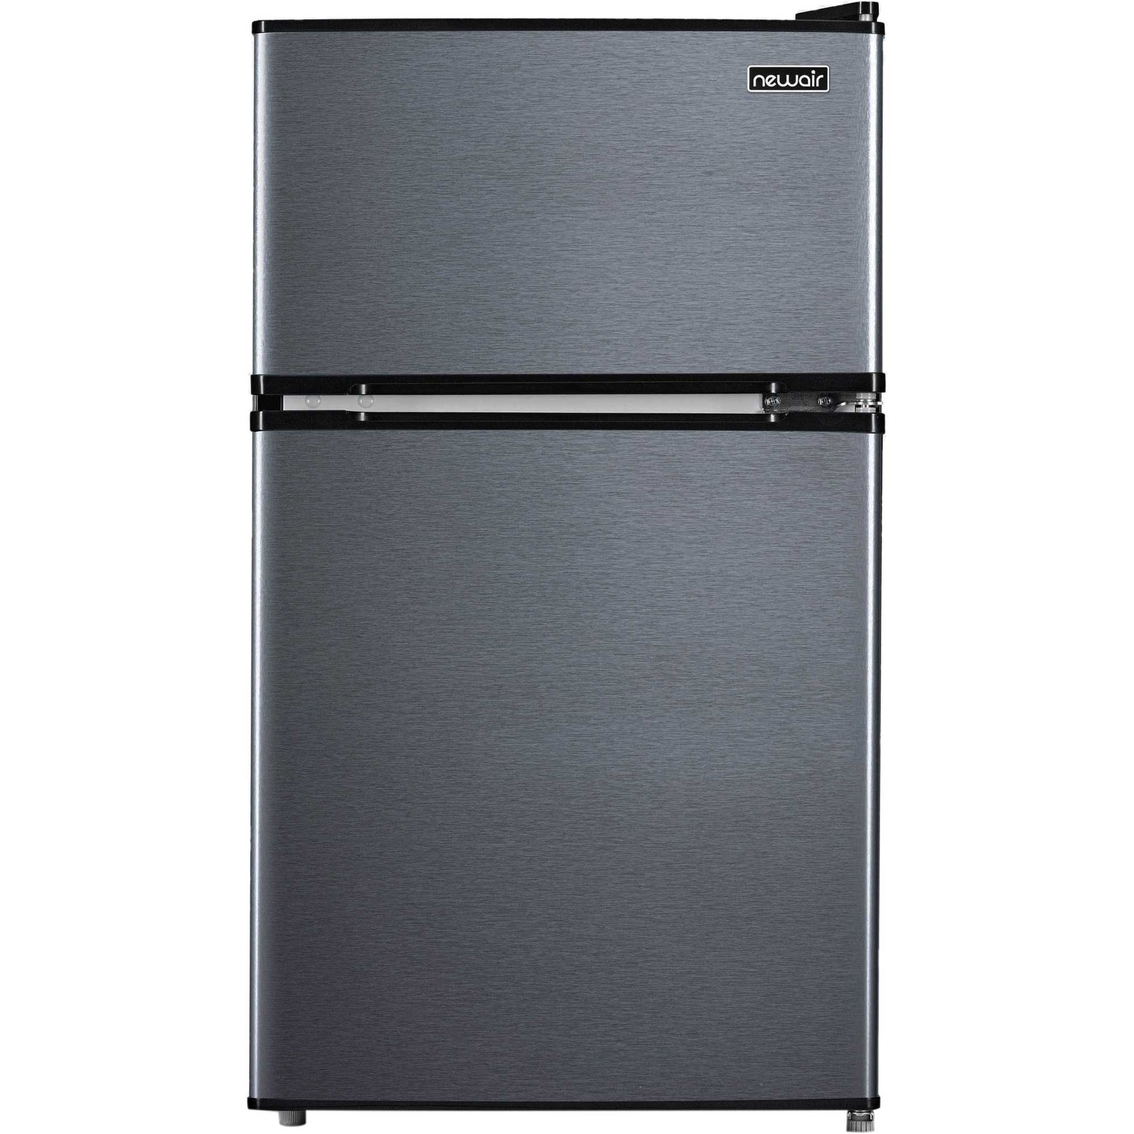 New Air LLC 3.1 cu. ft. Compact Refrigerator